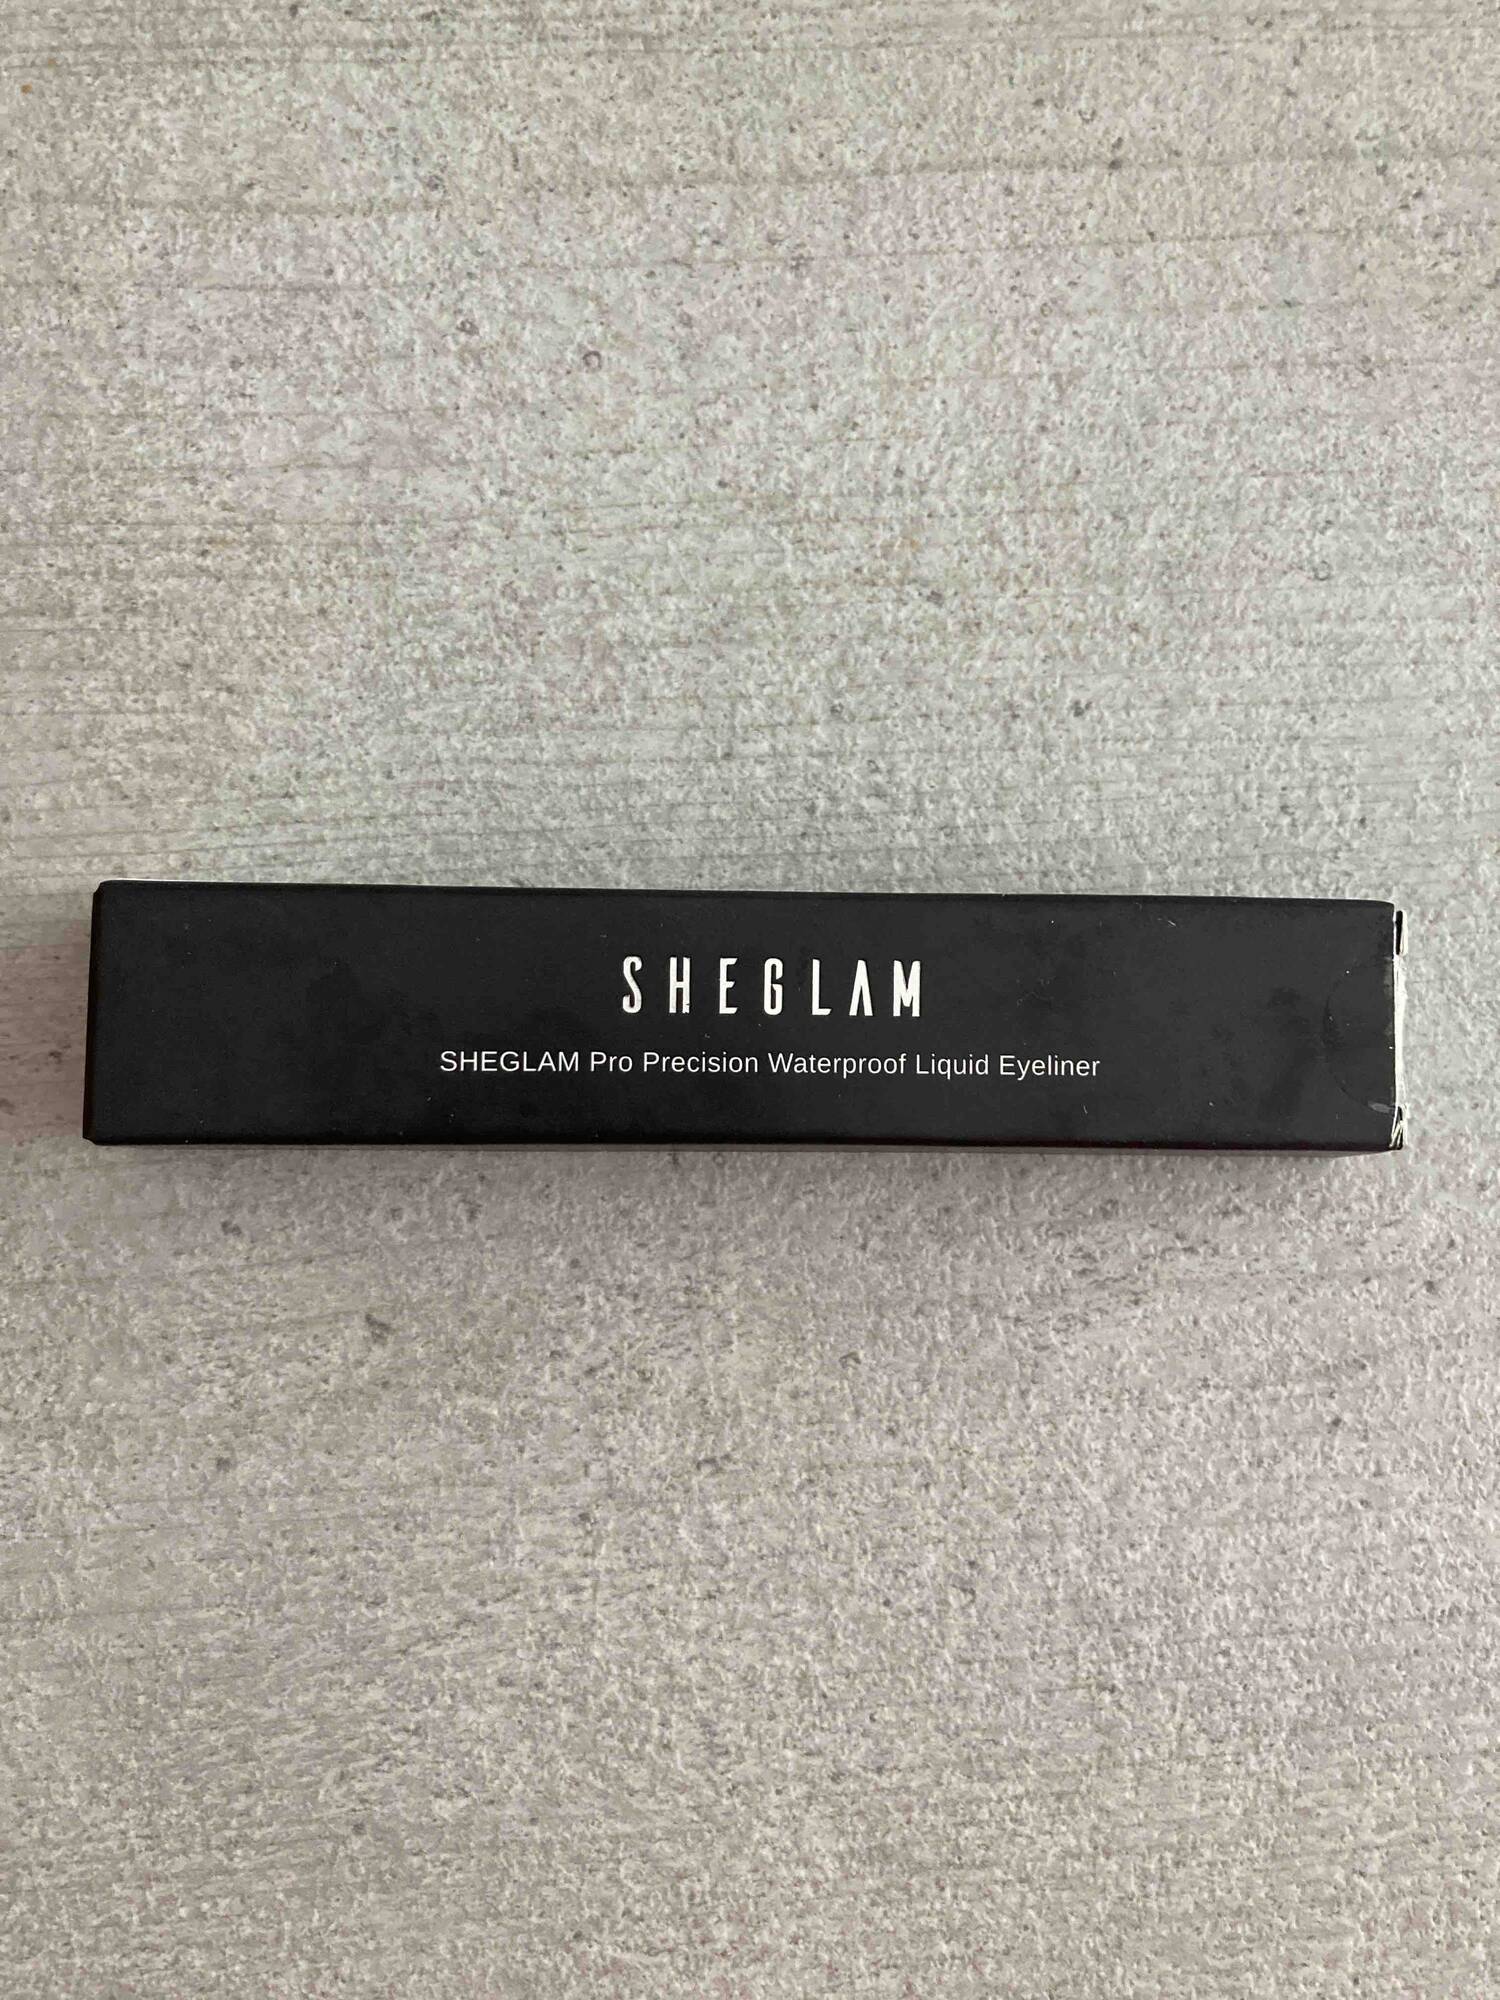 SHEGLAM - Pro Precision Waterproof Liquid Eyeliner